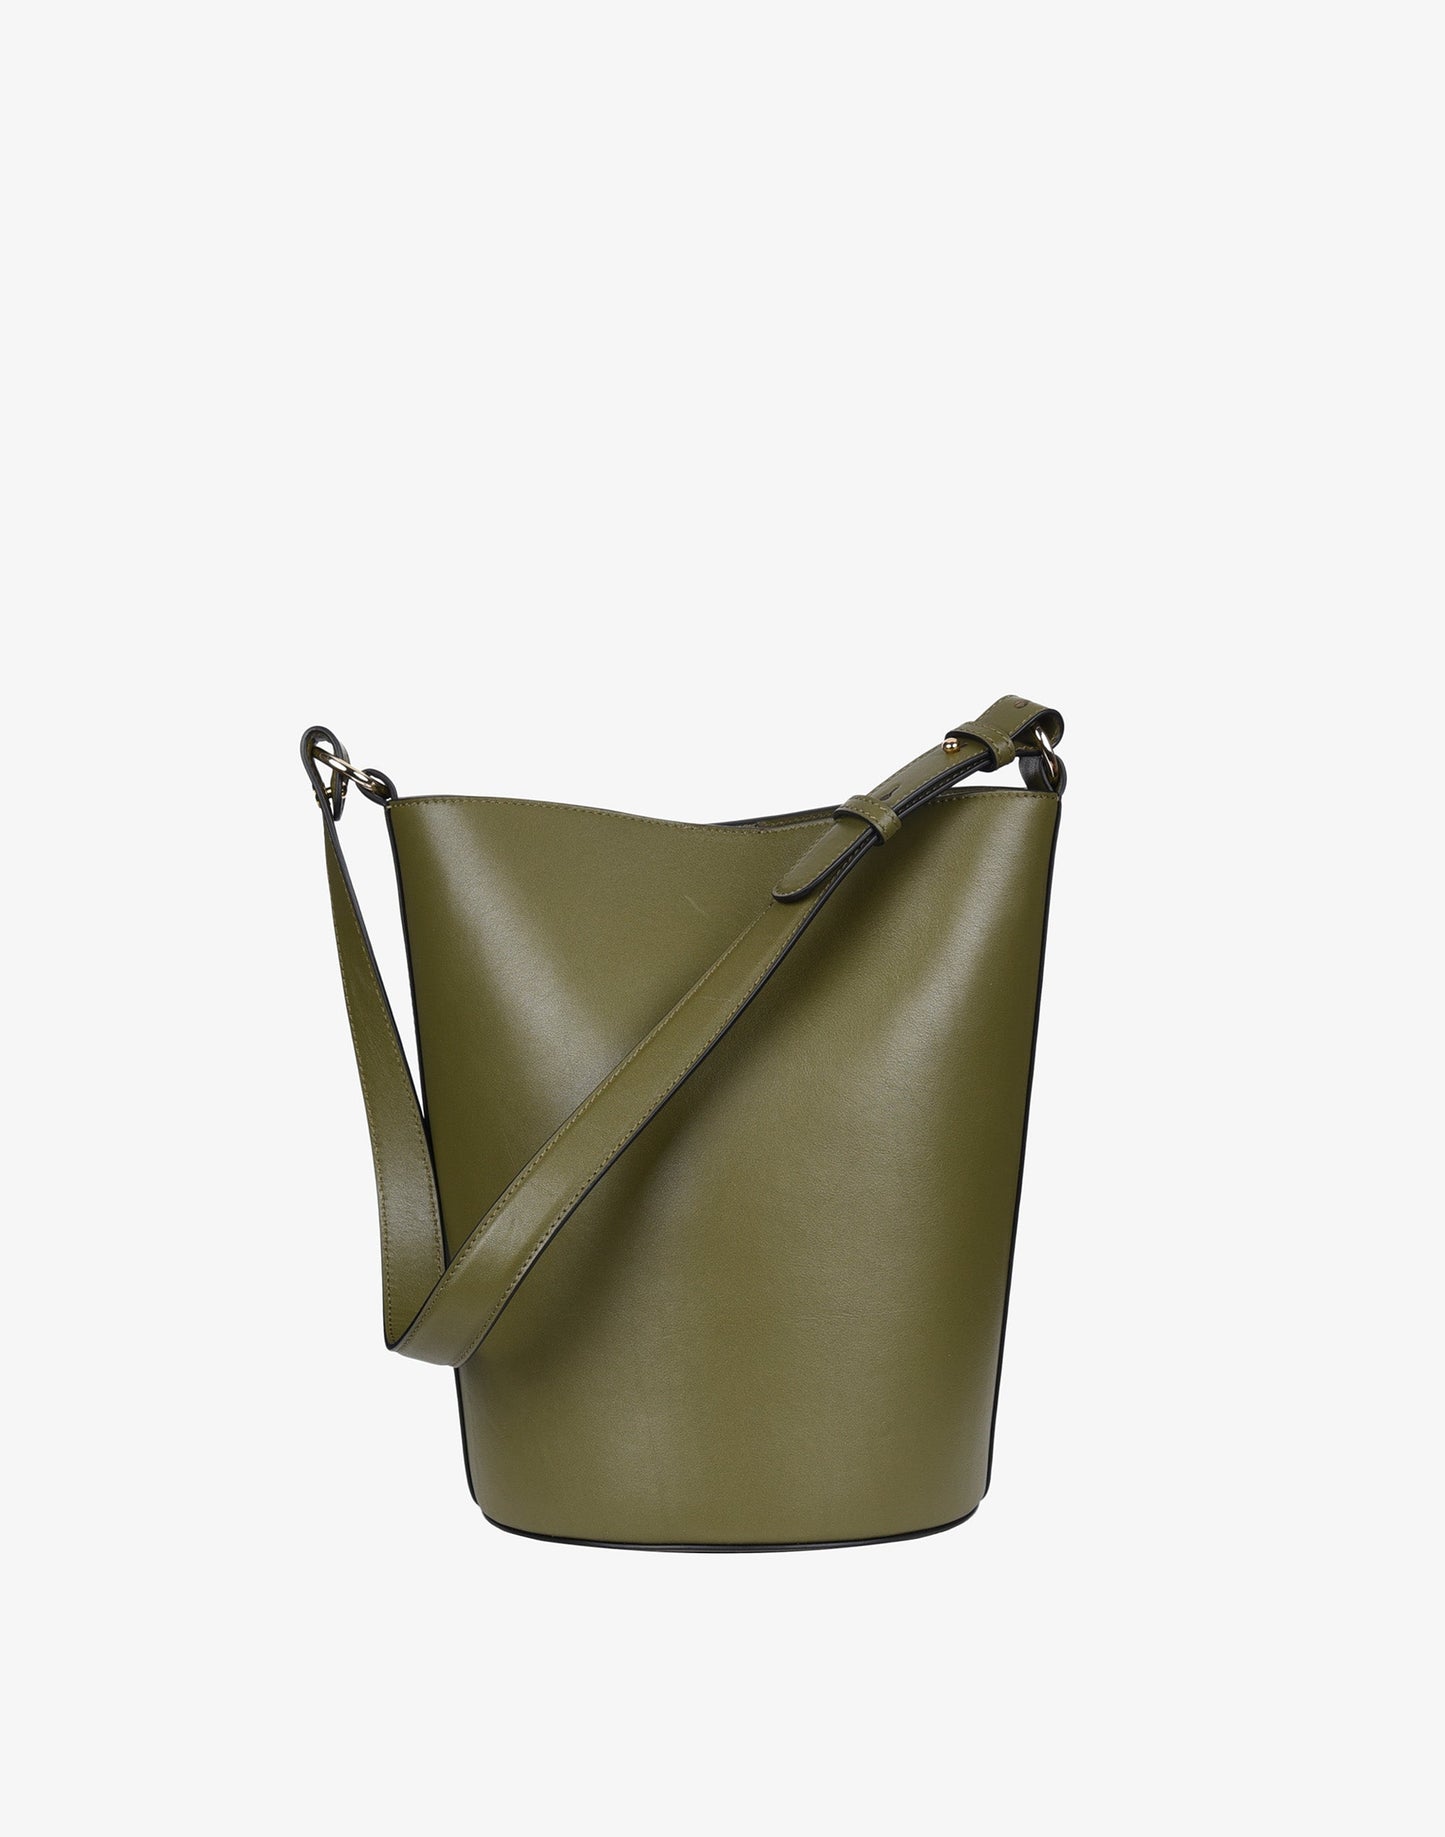 Luxe Convertible Bucket Bag